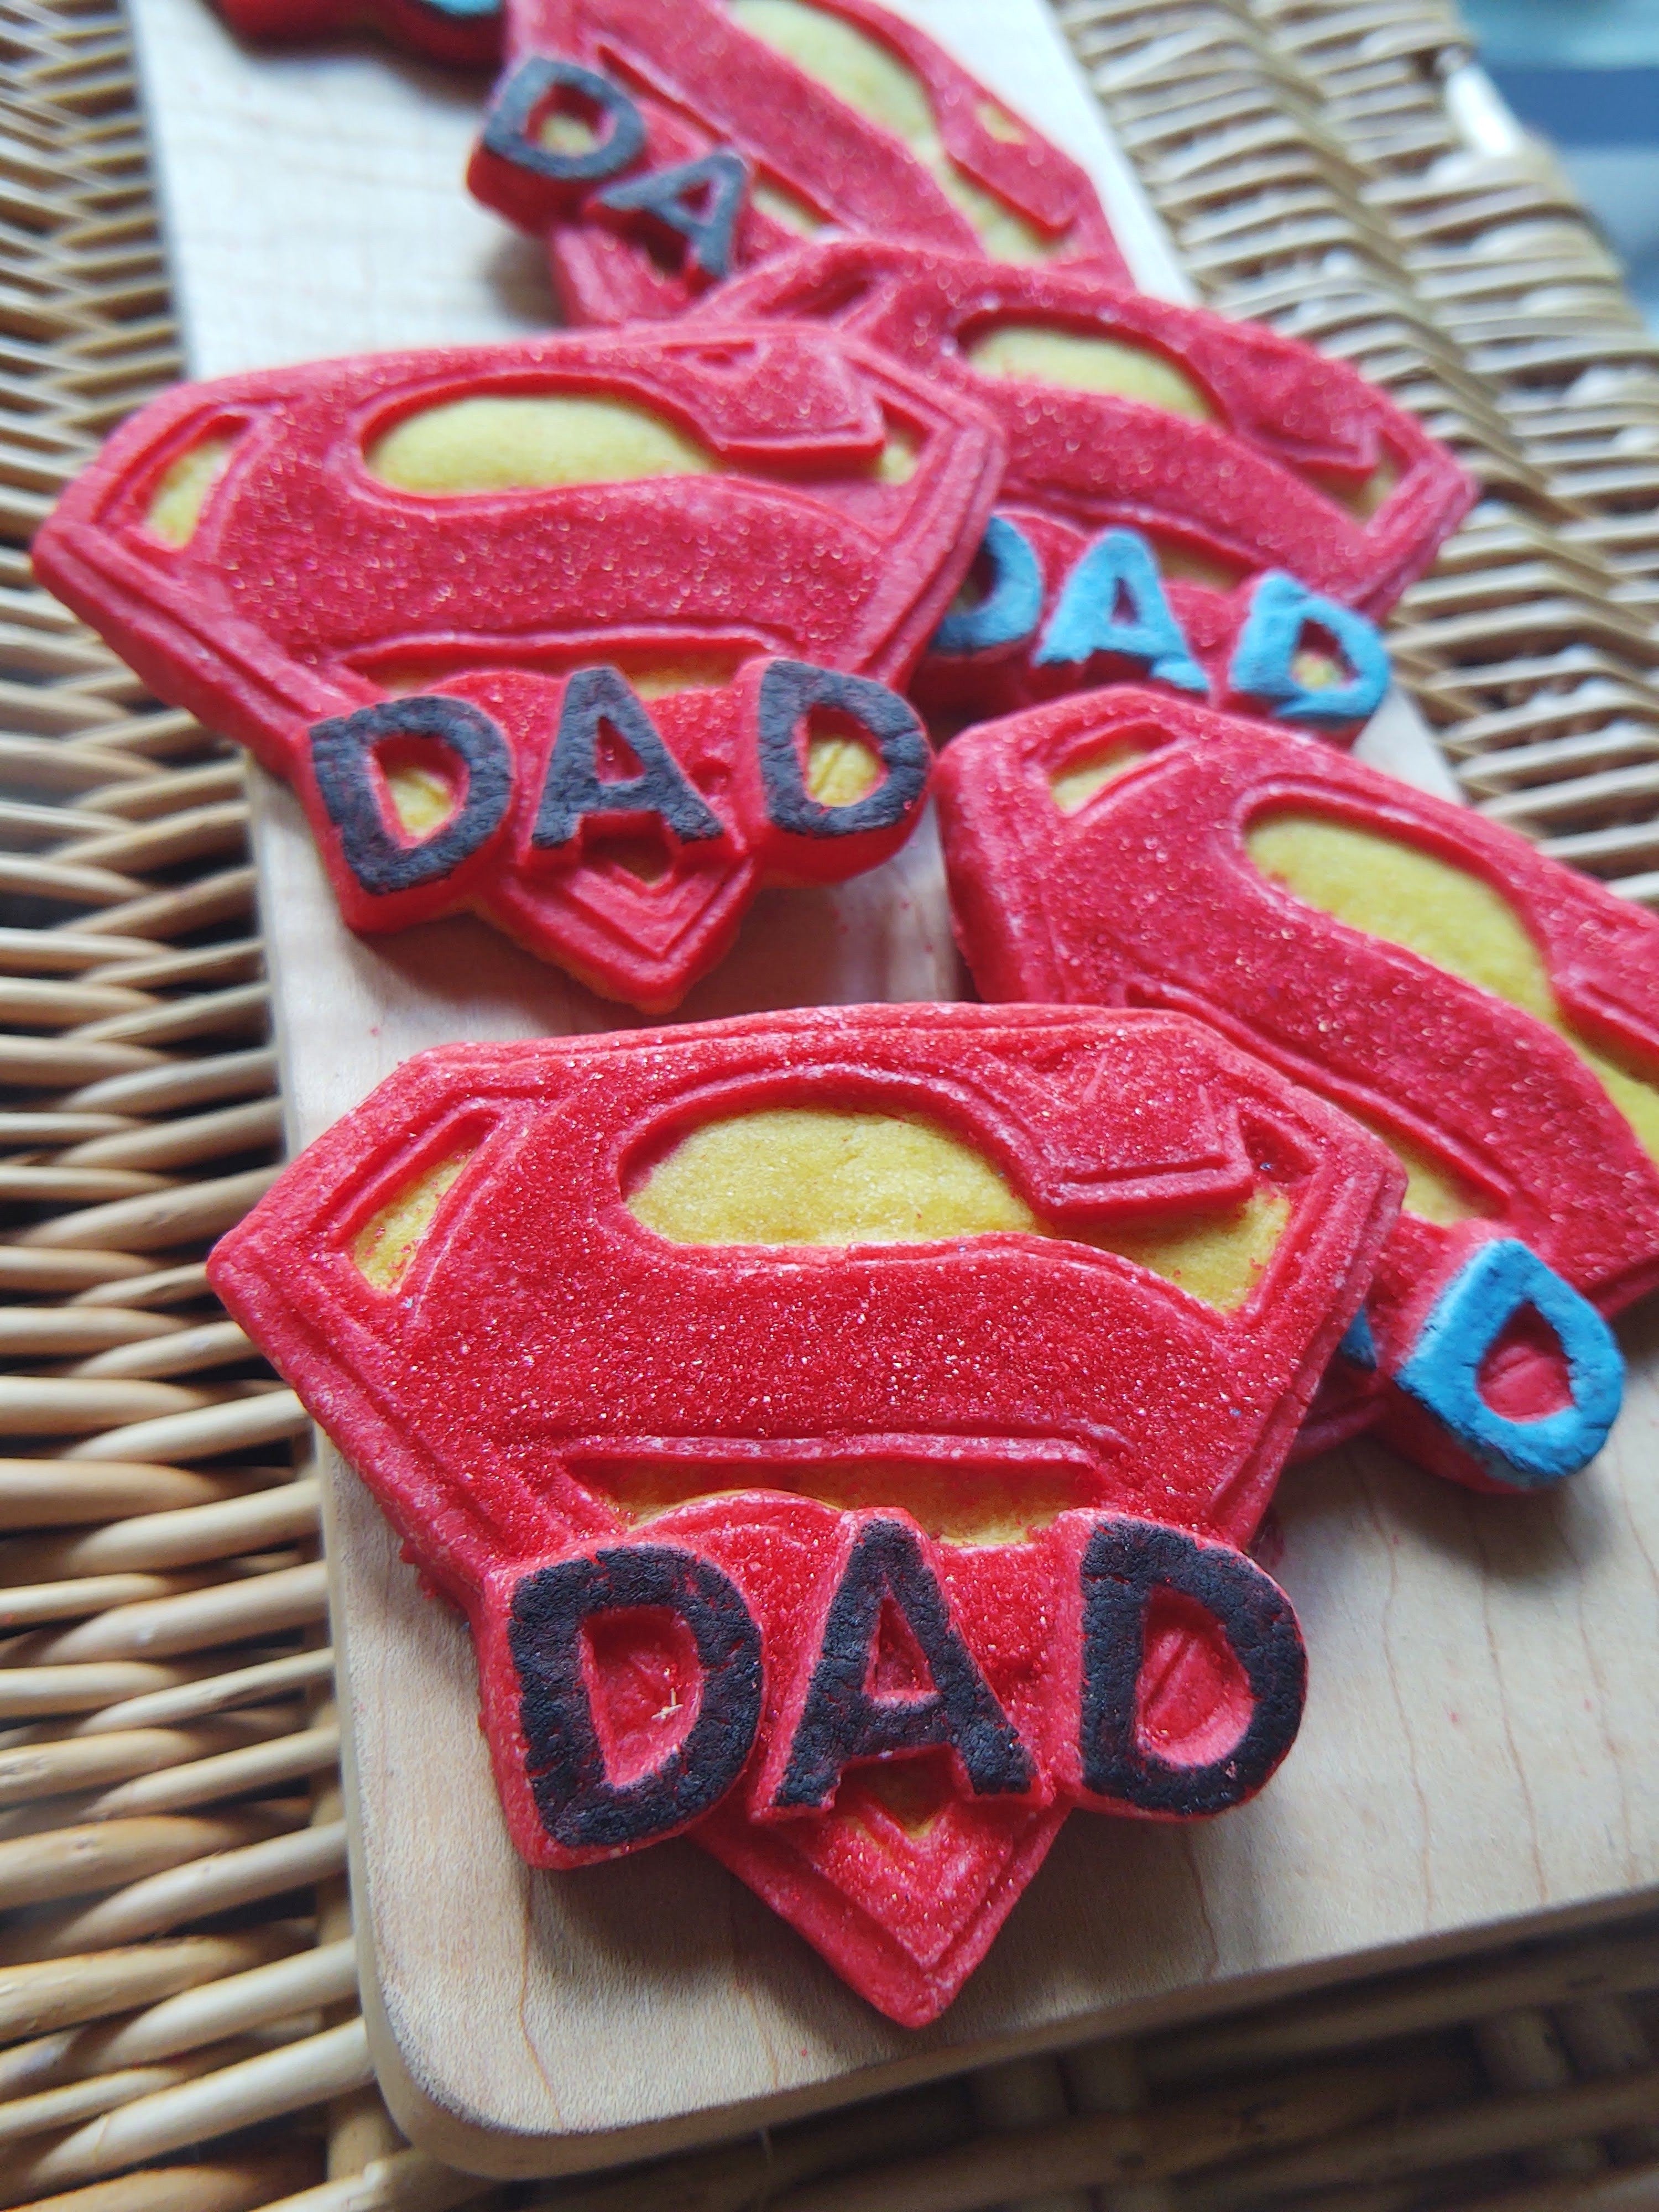 Super Dad Silicone Cookie Mold